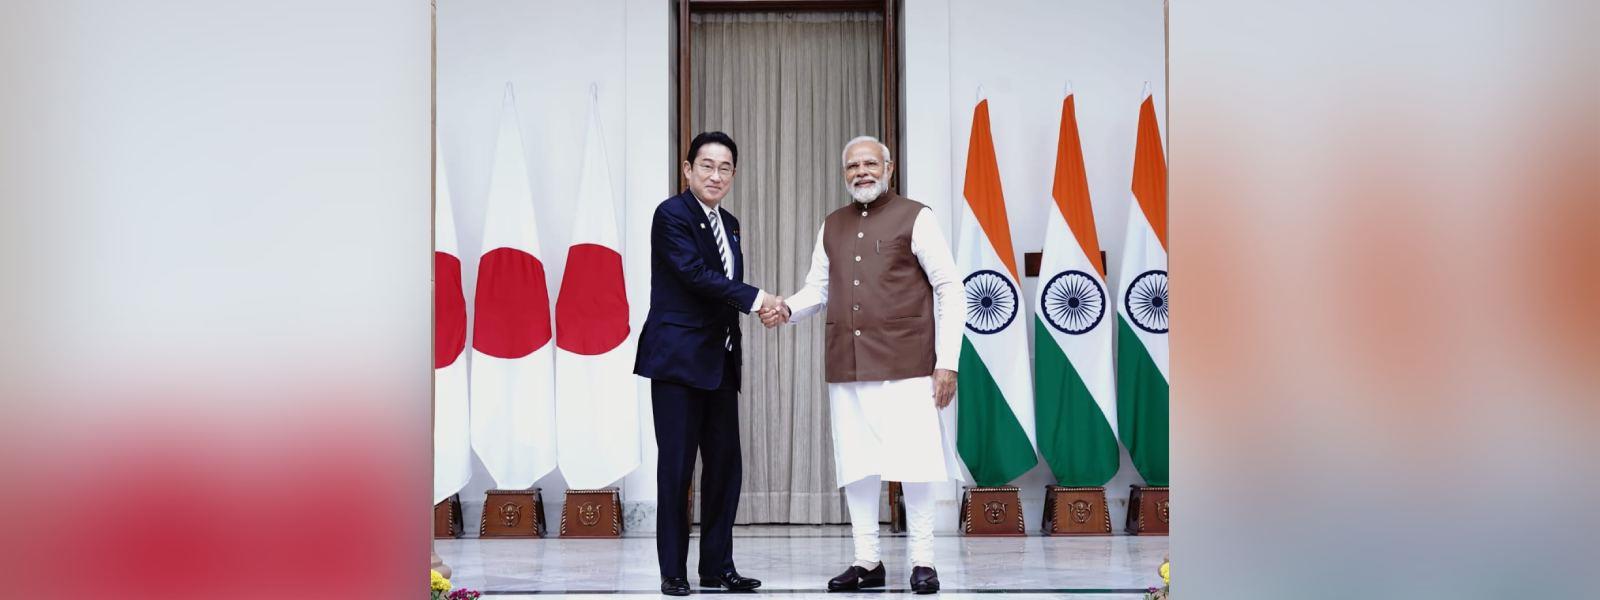 Prime Minister Shri Narendra Modi welcomed H. E. Mr. Fumio Kishida, Prime Minister of Japan at Hyderabad House